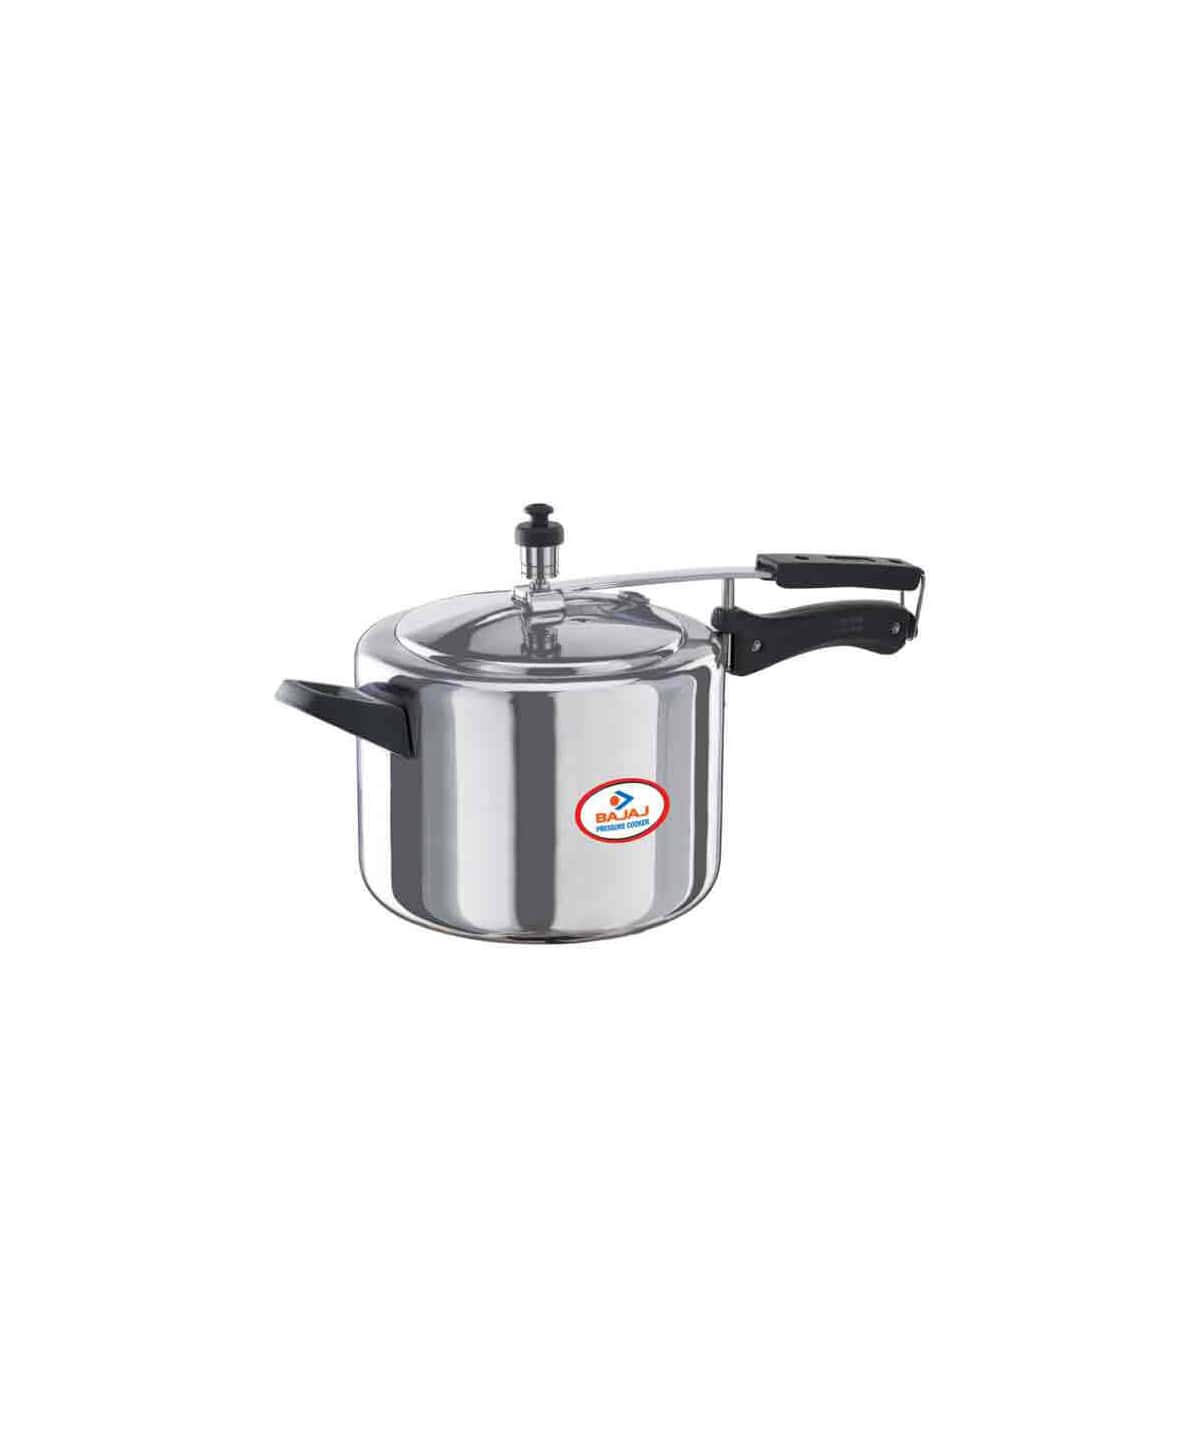 Bajaj PCX 35 5L Silver Pressure Cooker | Georgee and Company